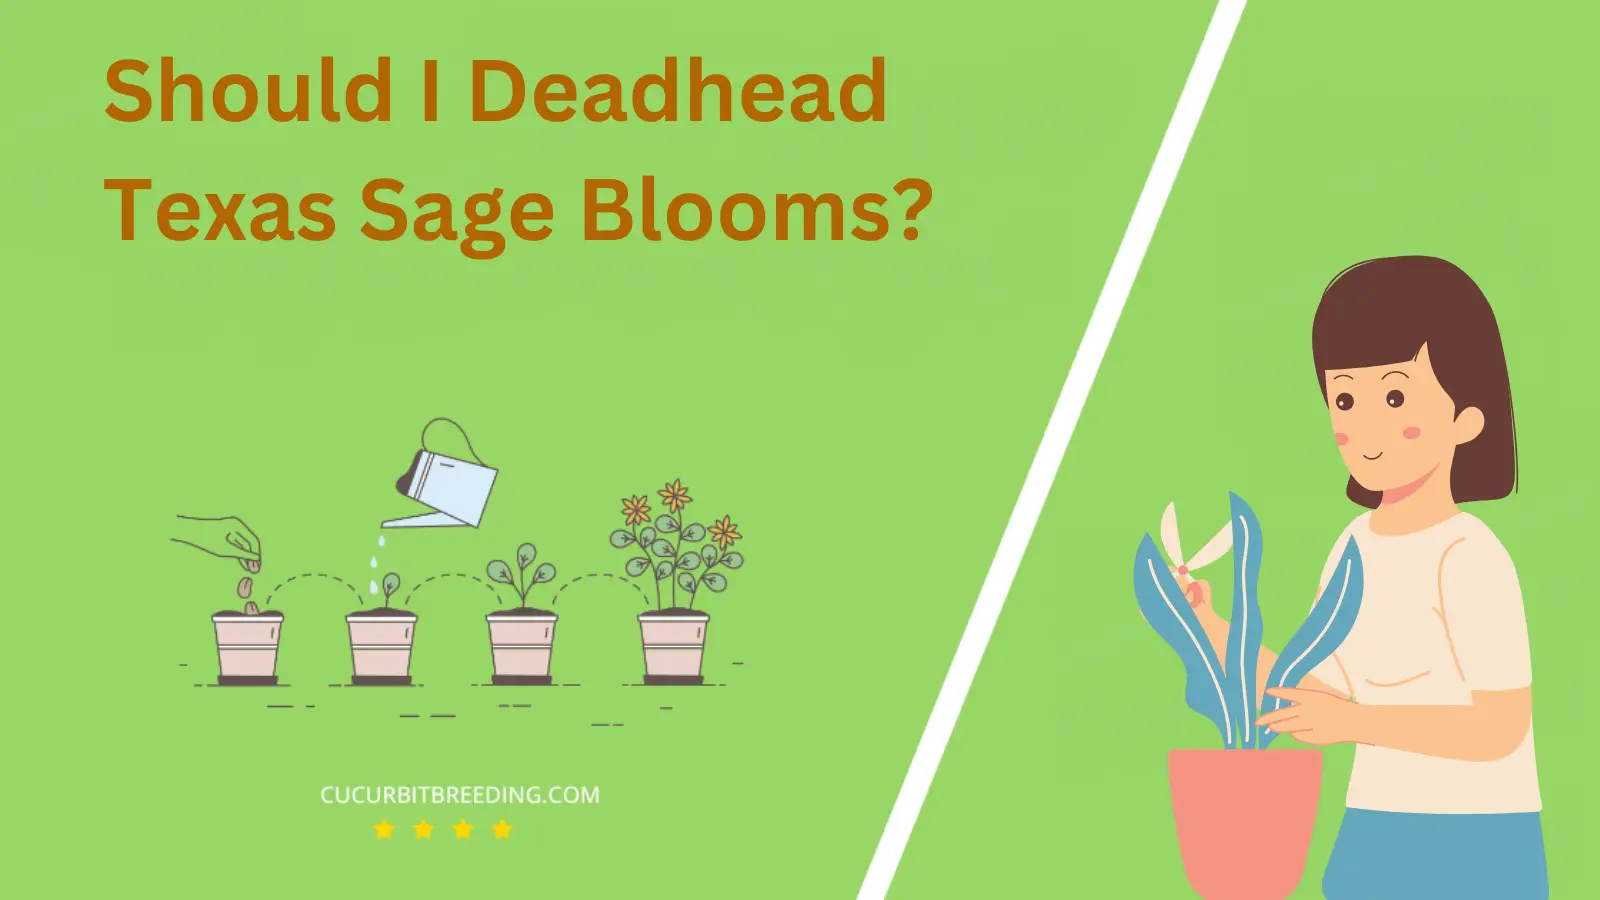 Should I Deadhead Texas Sage Blooms?